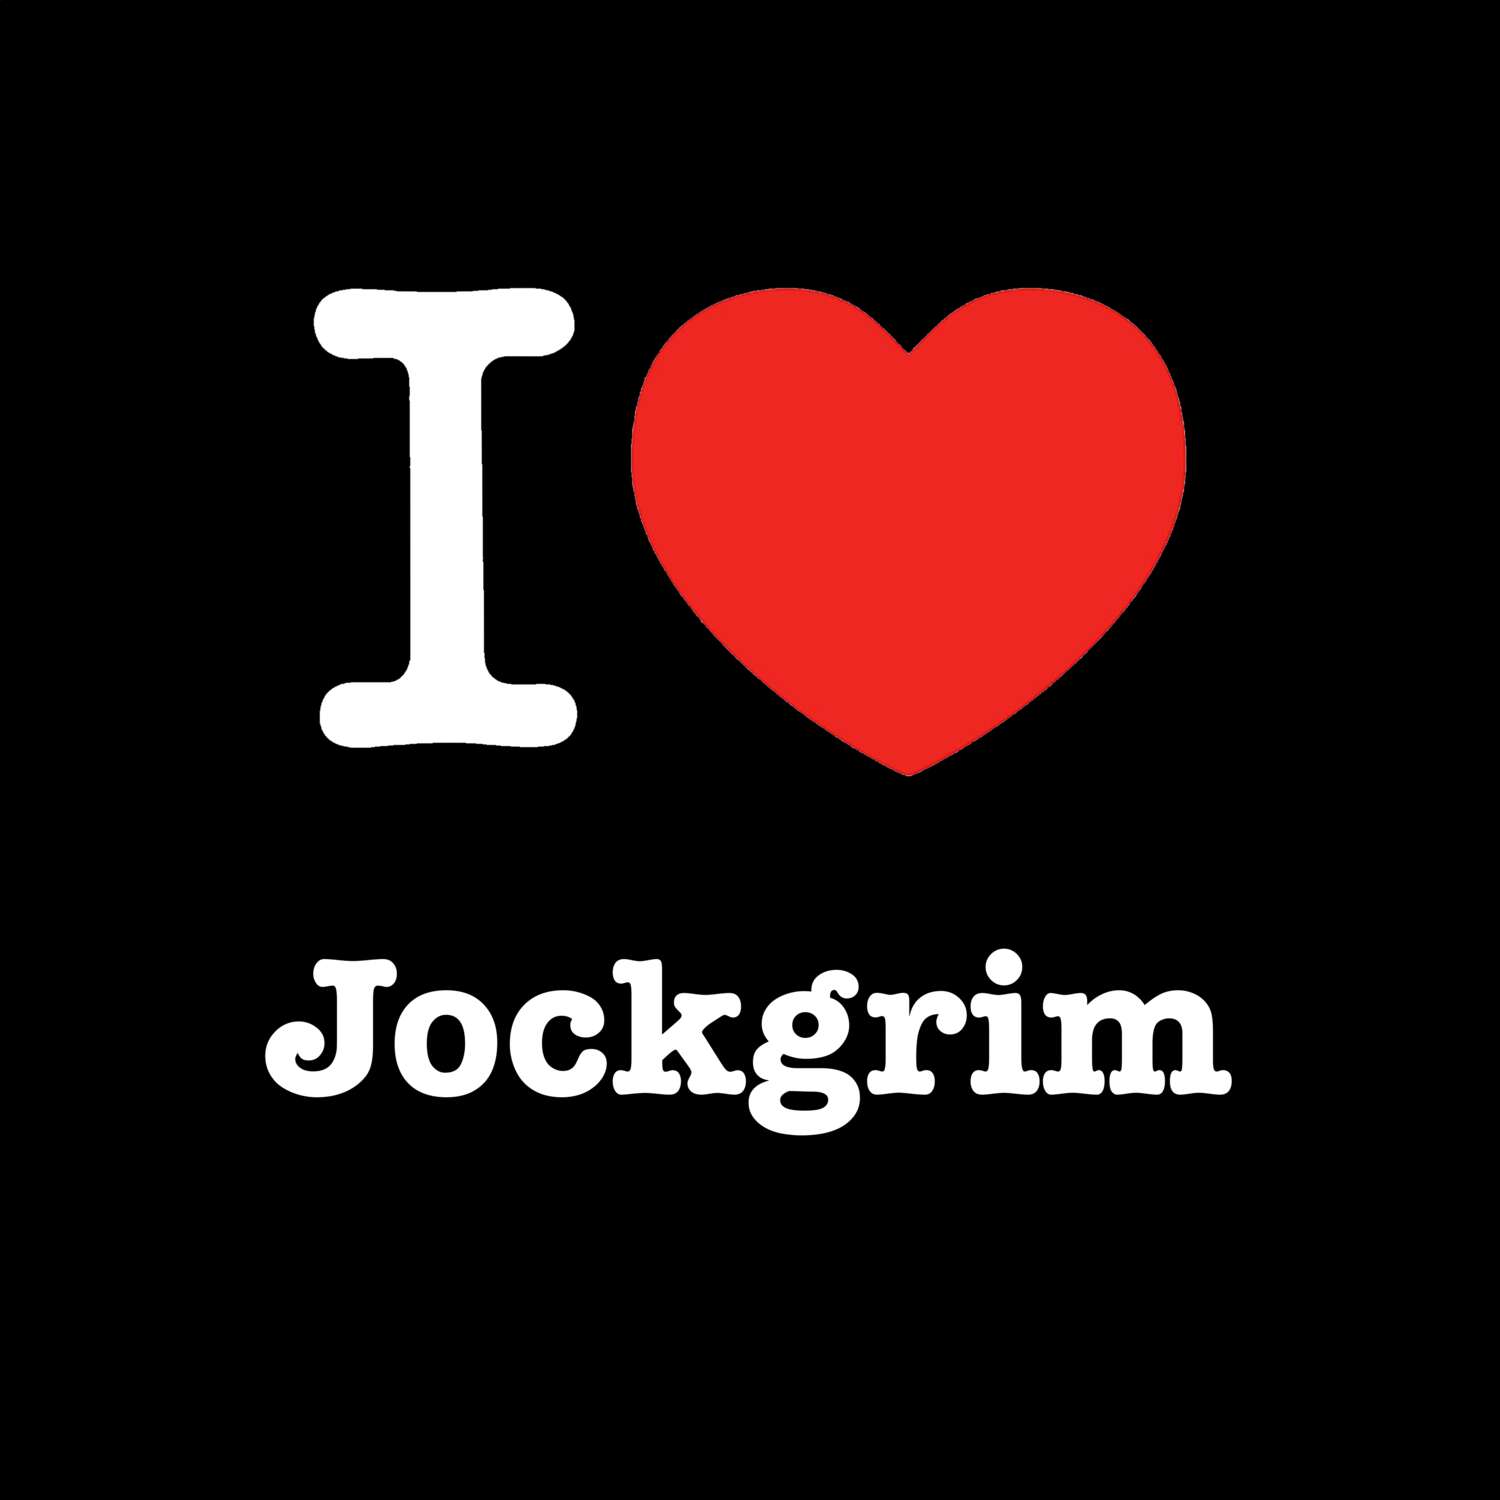 Jockgrim T-Shirt »I love«